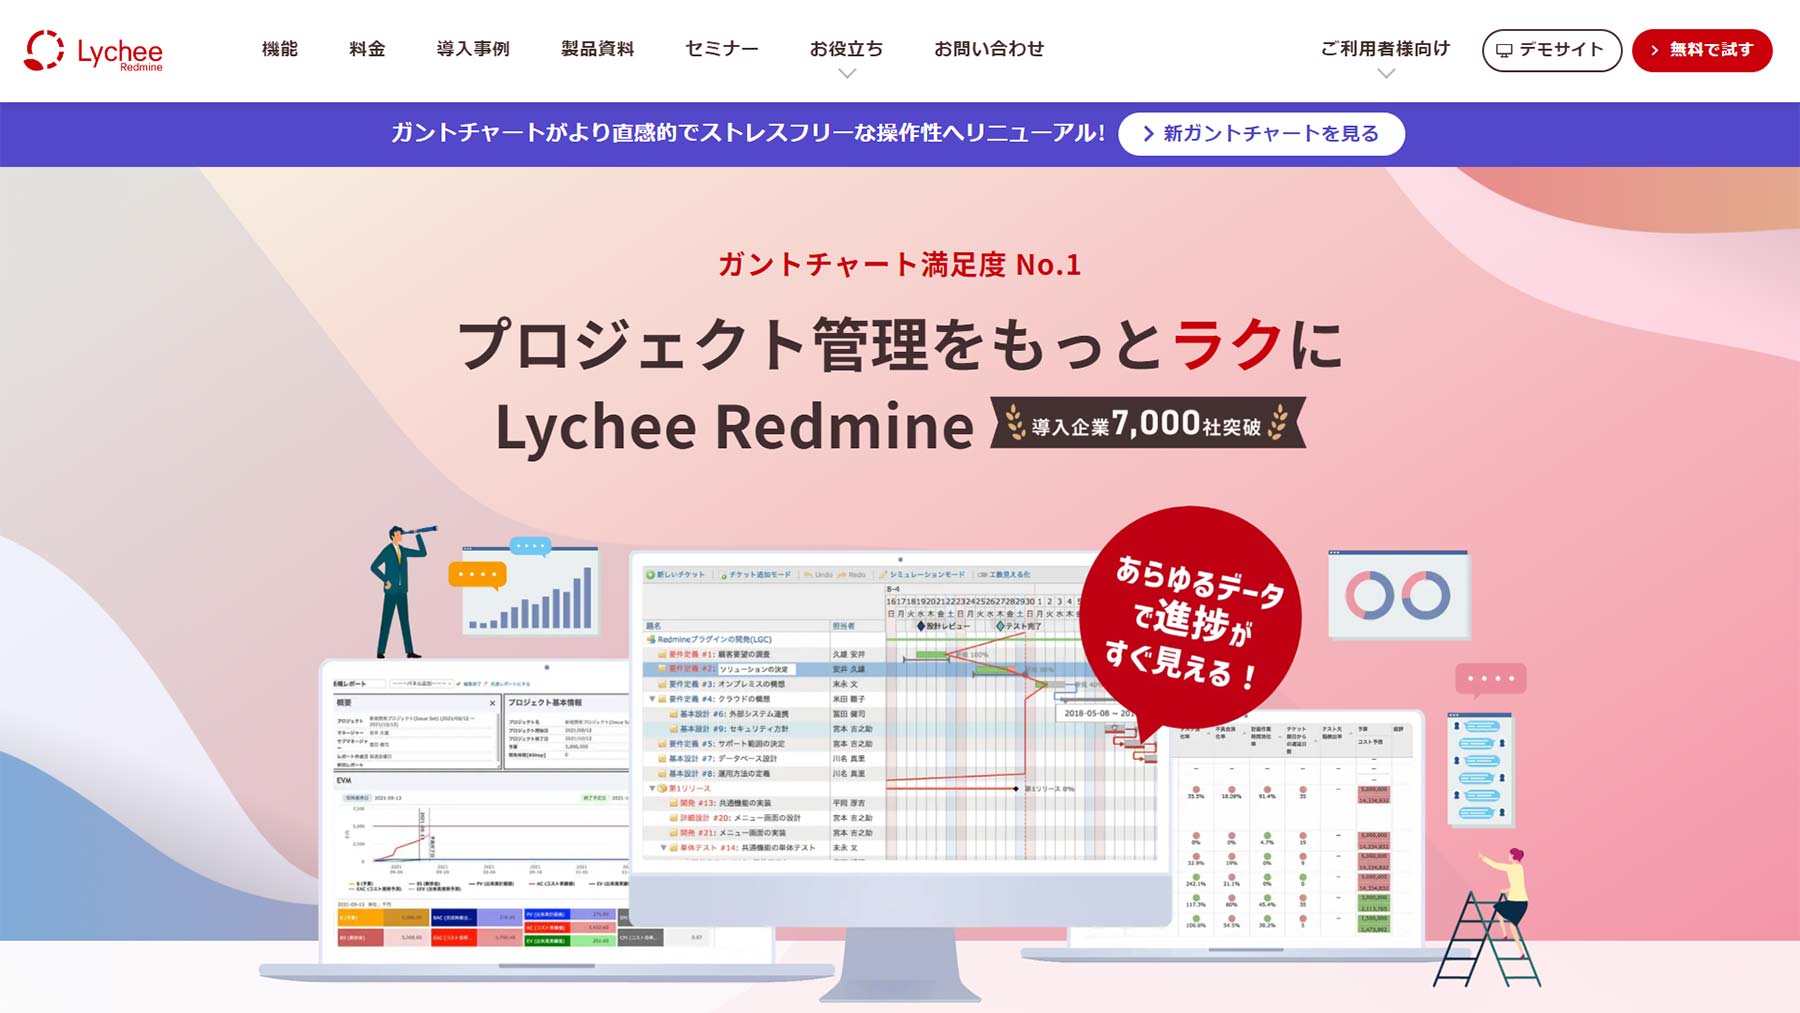 Lychee Redmine公式Webサイト